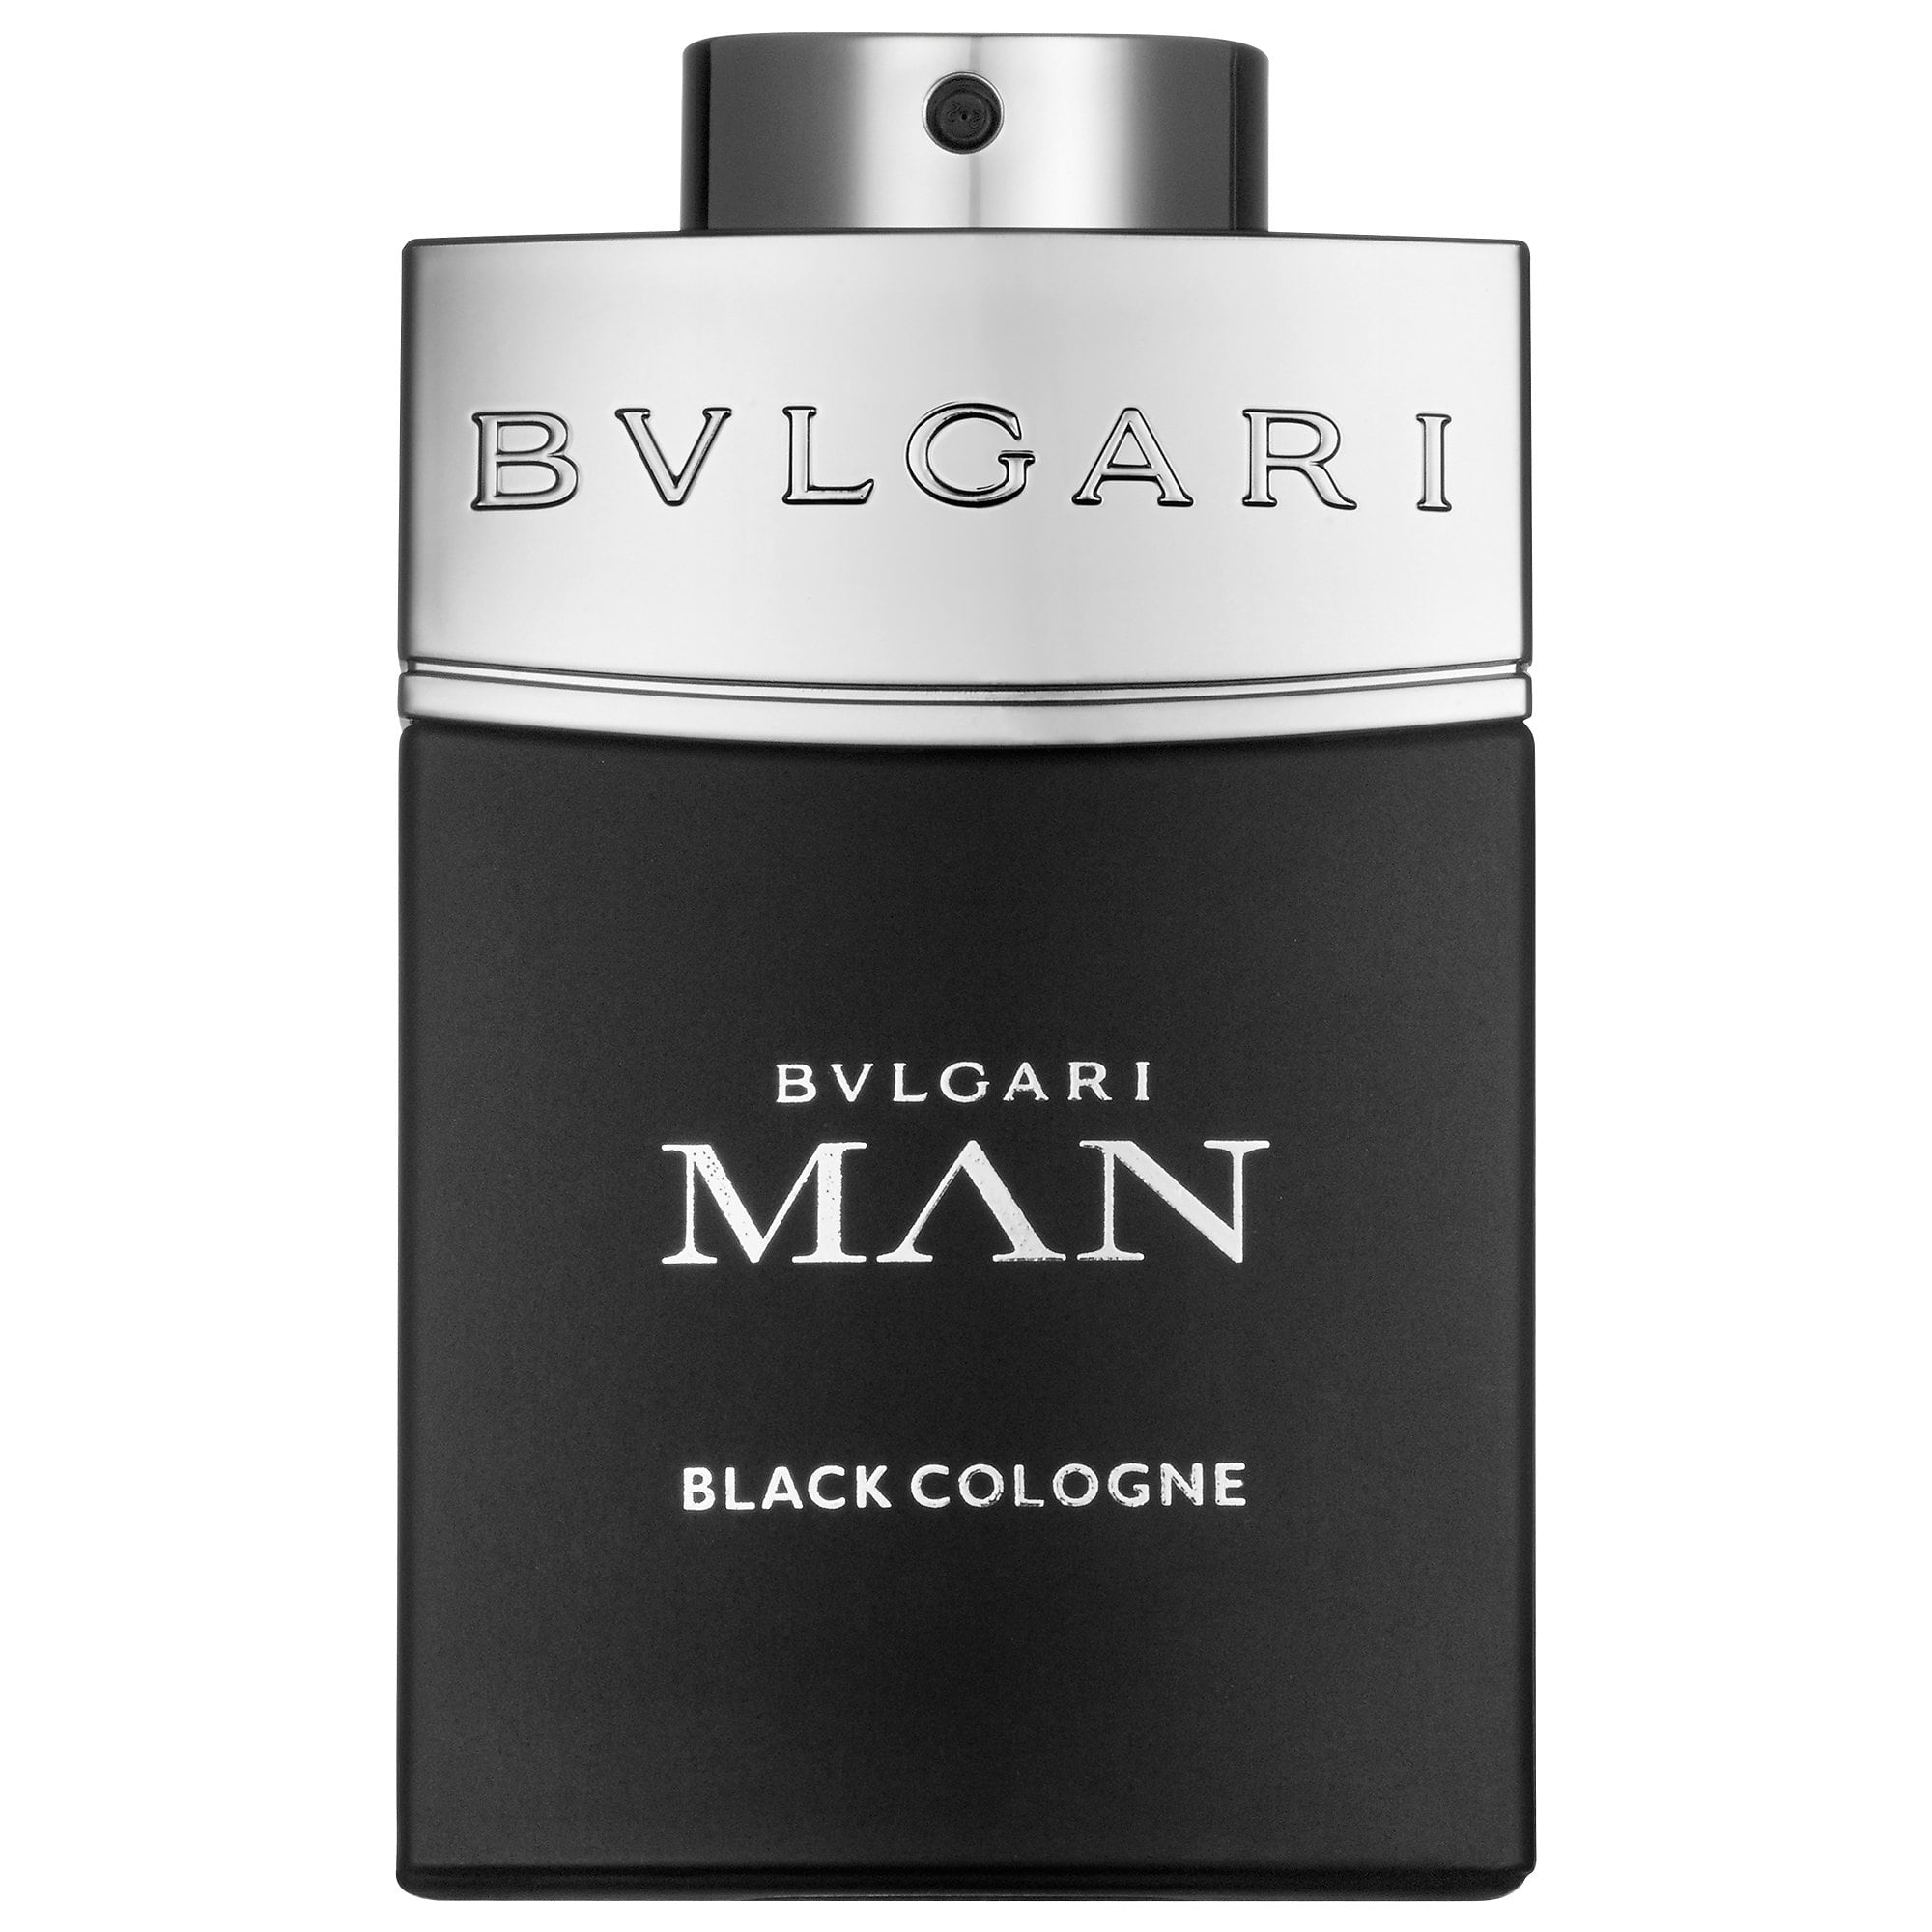 bvlgari black cologne price